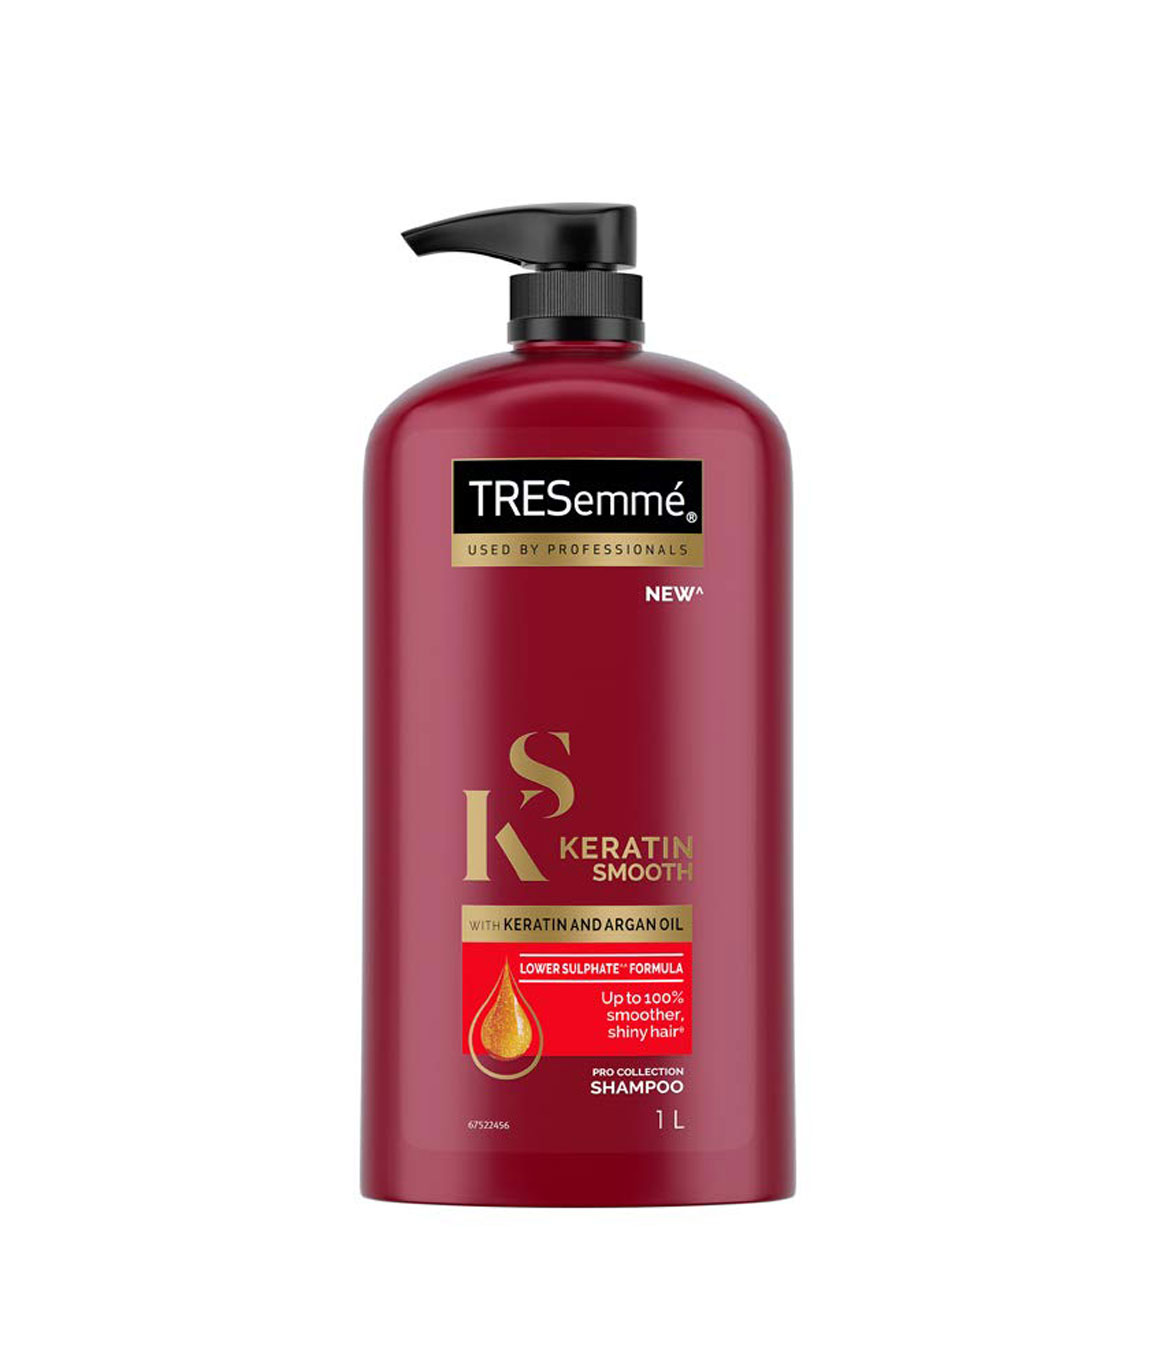 TRESemme Keratin Smooth Shampoo, 1L